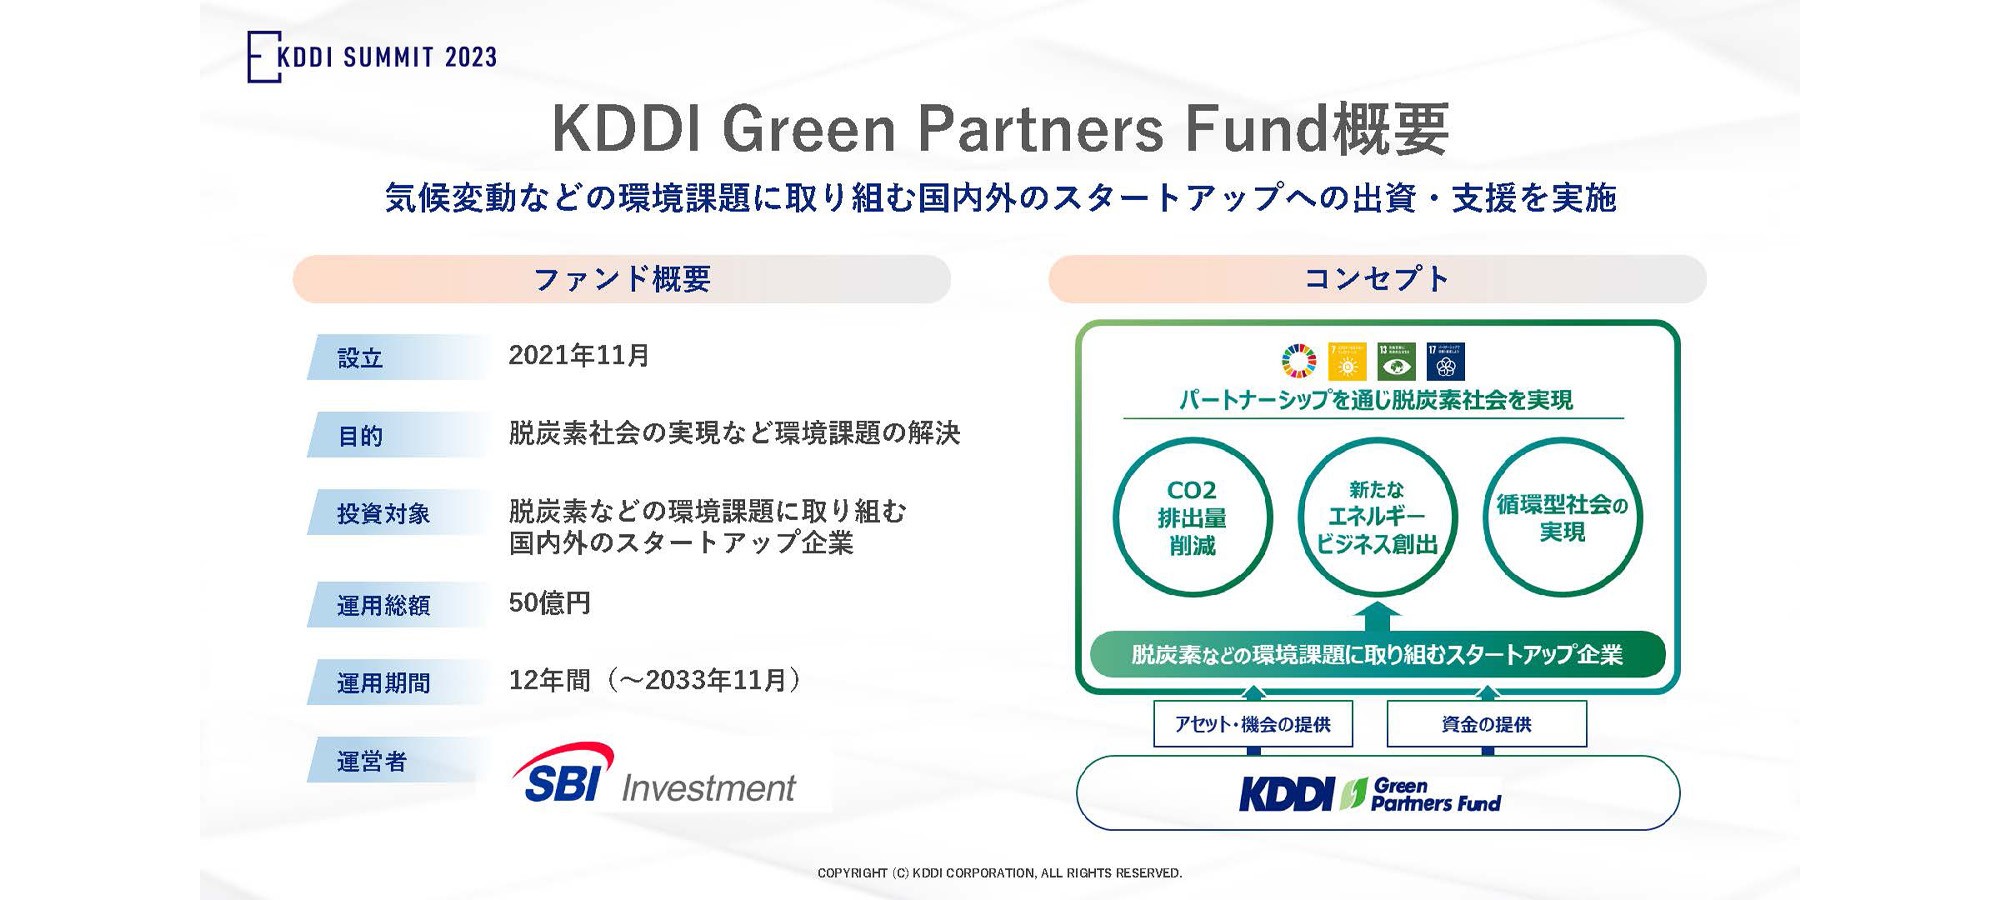 KDDI Green Partners Fund概要、気候変動などの環境課題に取り組む国内外のスタートアップへの出資・支援を実施「ファンド概要」・設立：2021年11月・目的：脱炭素社会の実現など環境課題の解決・投資対象：脱炭素などの環境課題に取り組む国内外のスタートアップ企業・運用総額：50億円・運用期間：12年間 (～2033年11月) ・運営者：SBI Investment「コンセプト」パートナーシップを通じ脱炭素社会を実現、KDDI Green Partners Find アセット・機会の提供、資金の提供「CO2排出量削減」「新たなエネルギービジネス創出」「循環型社会の実現」